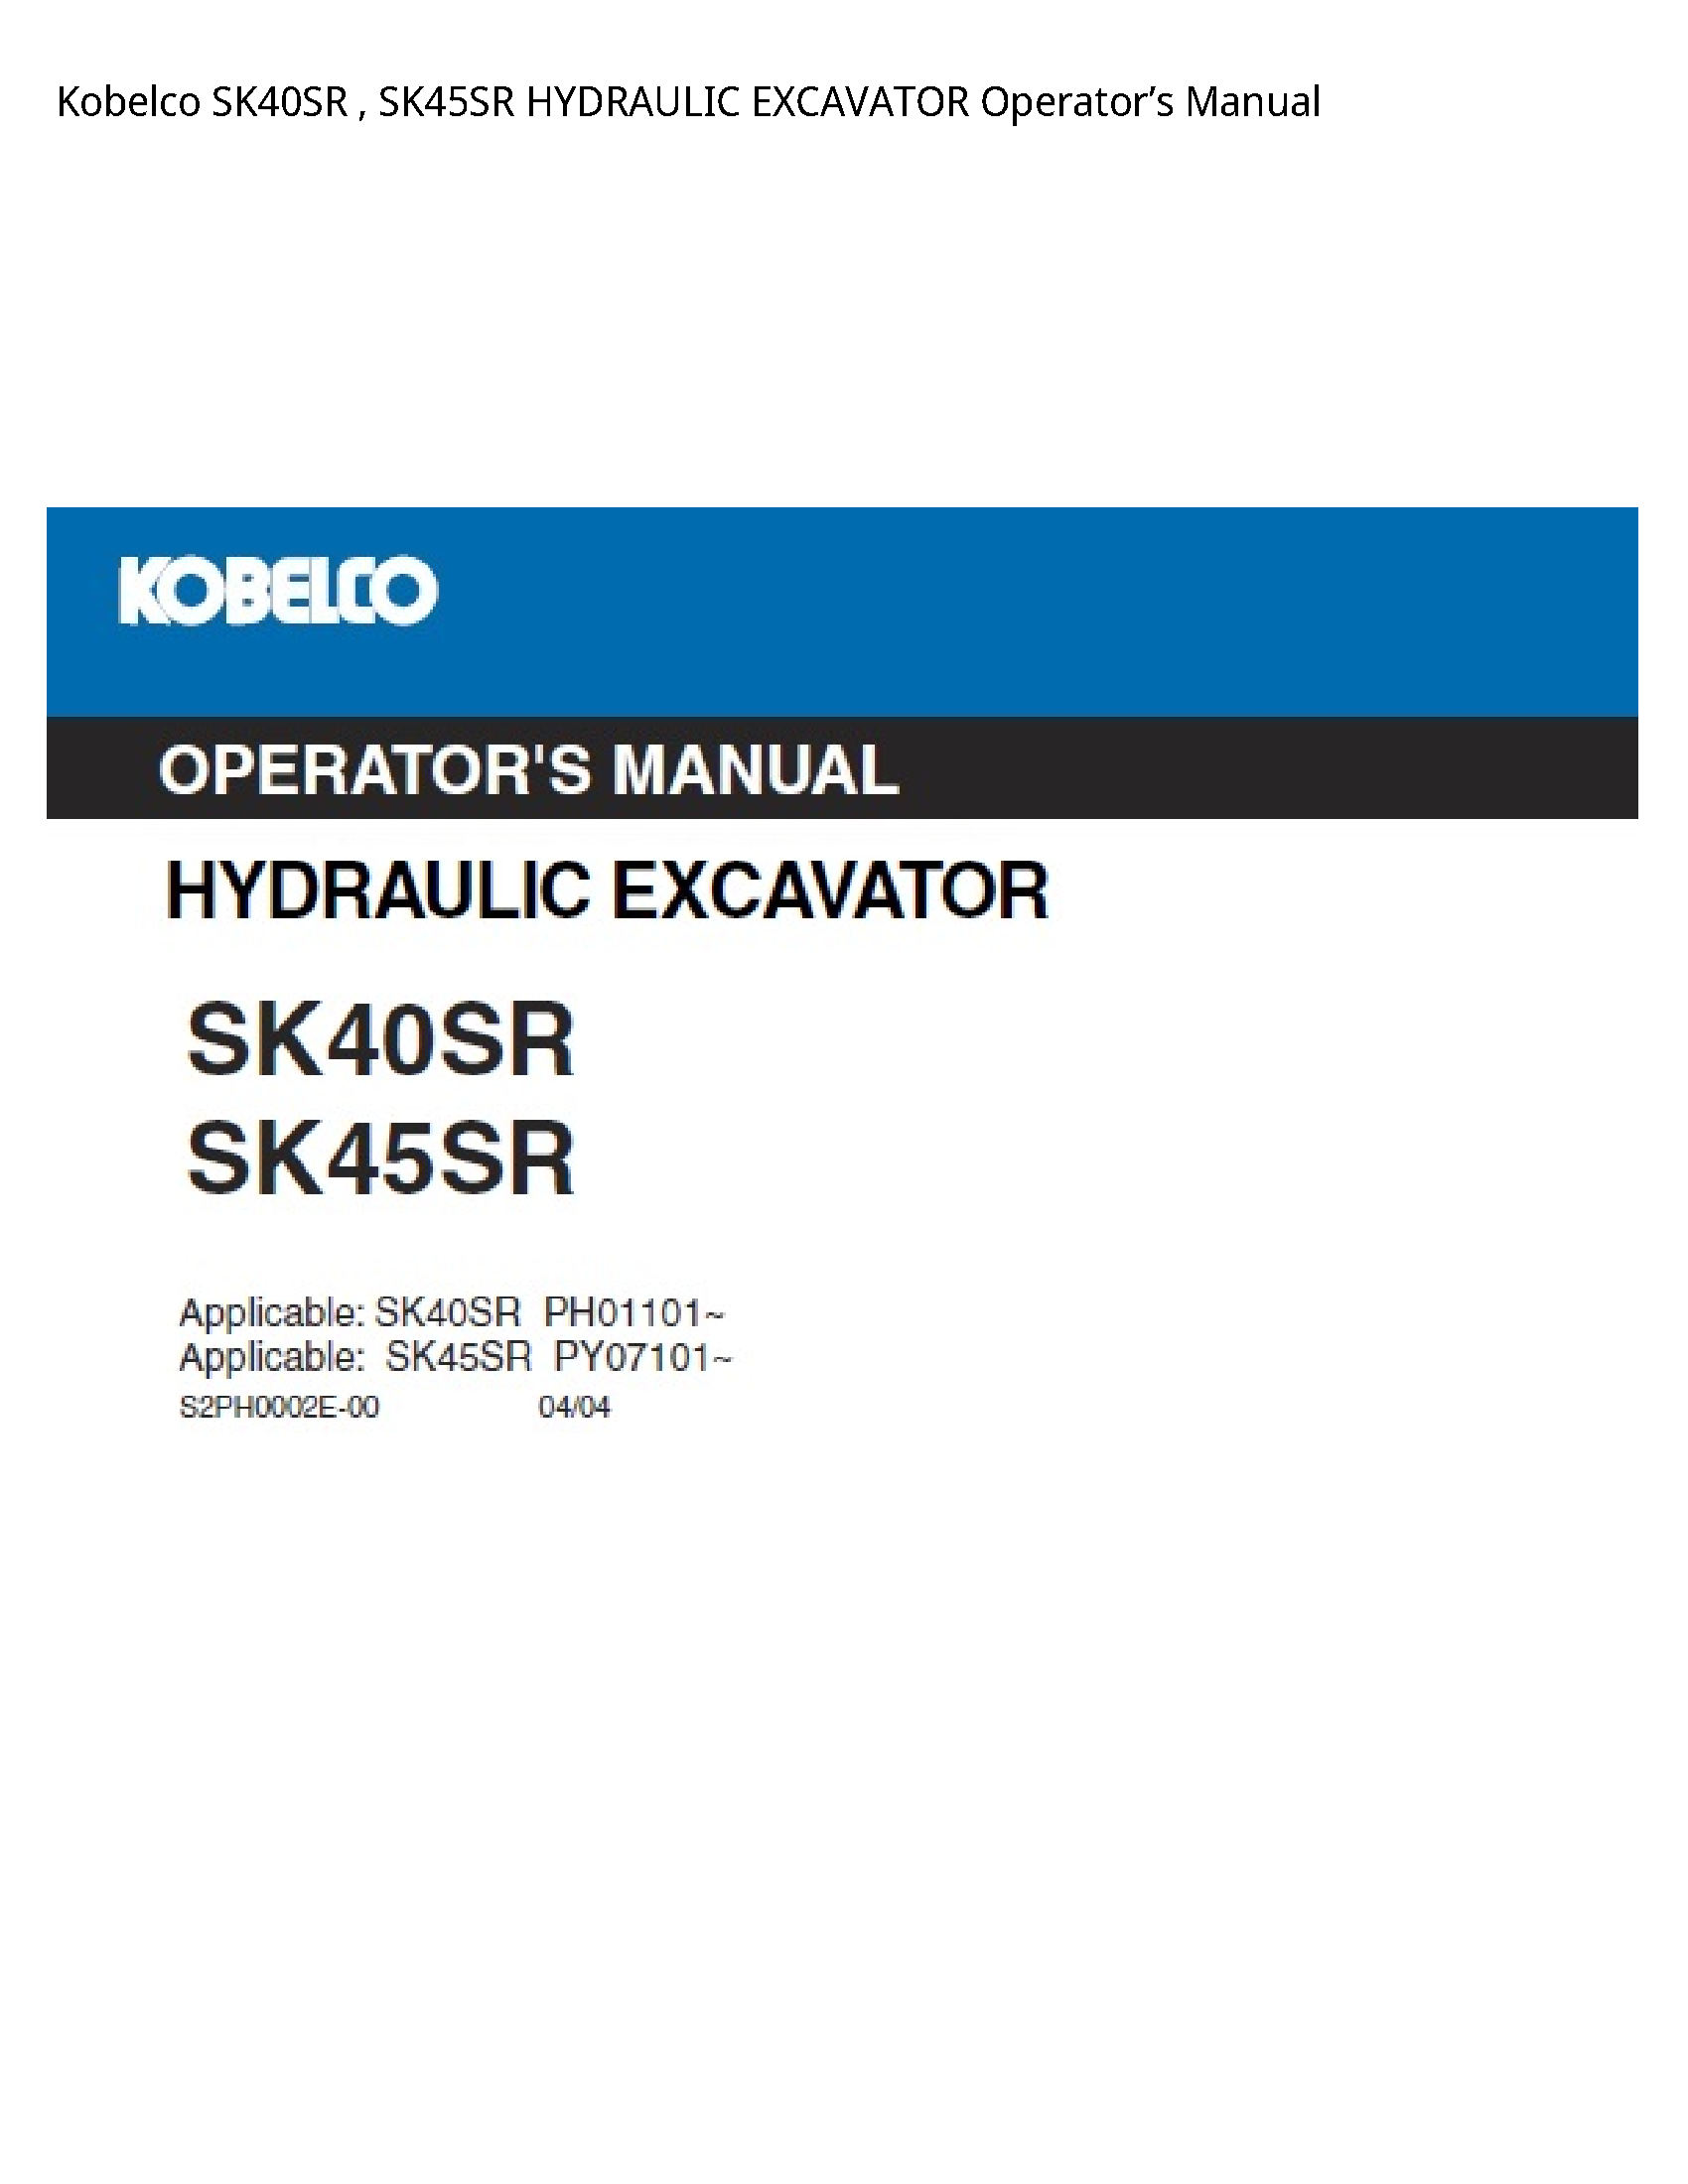 Kobelco SK40SR HYDRAULIC EXCAVATOR Operator’s manual